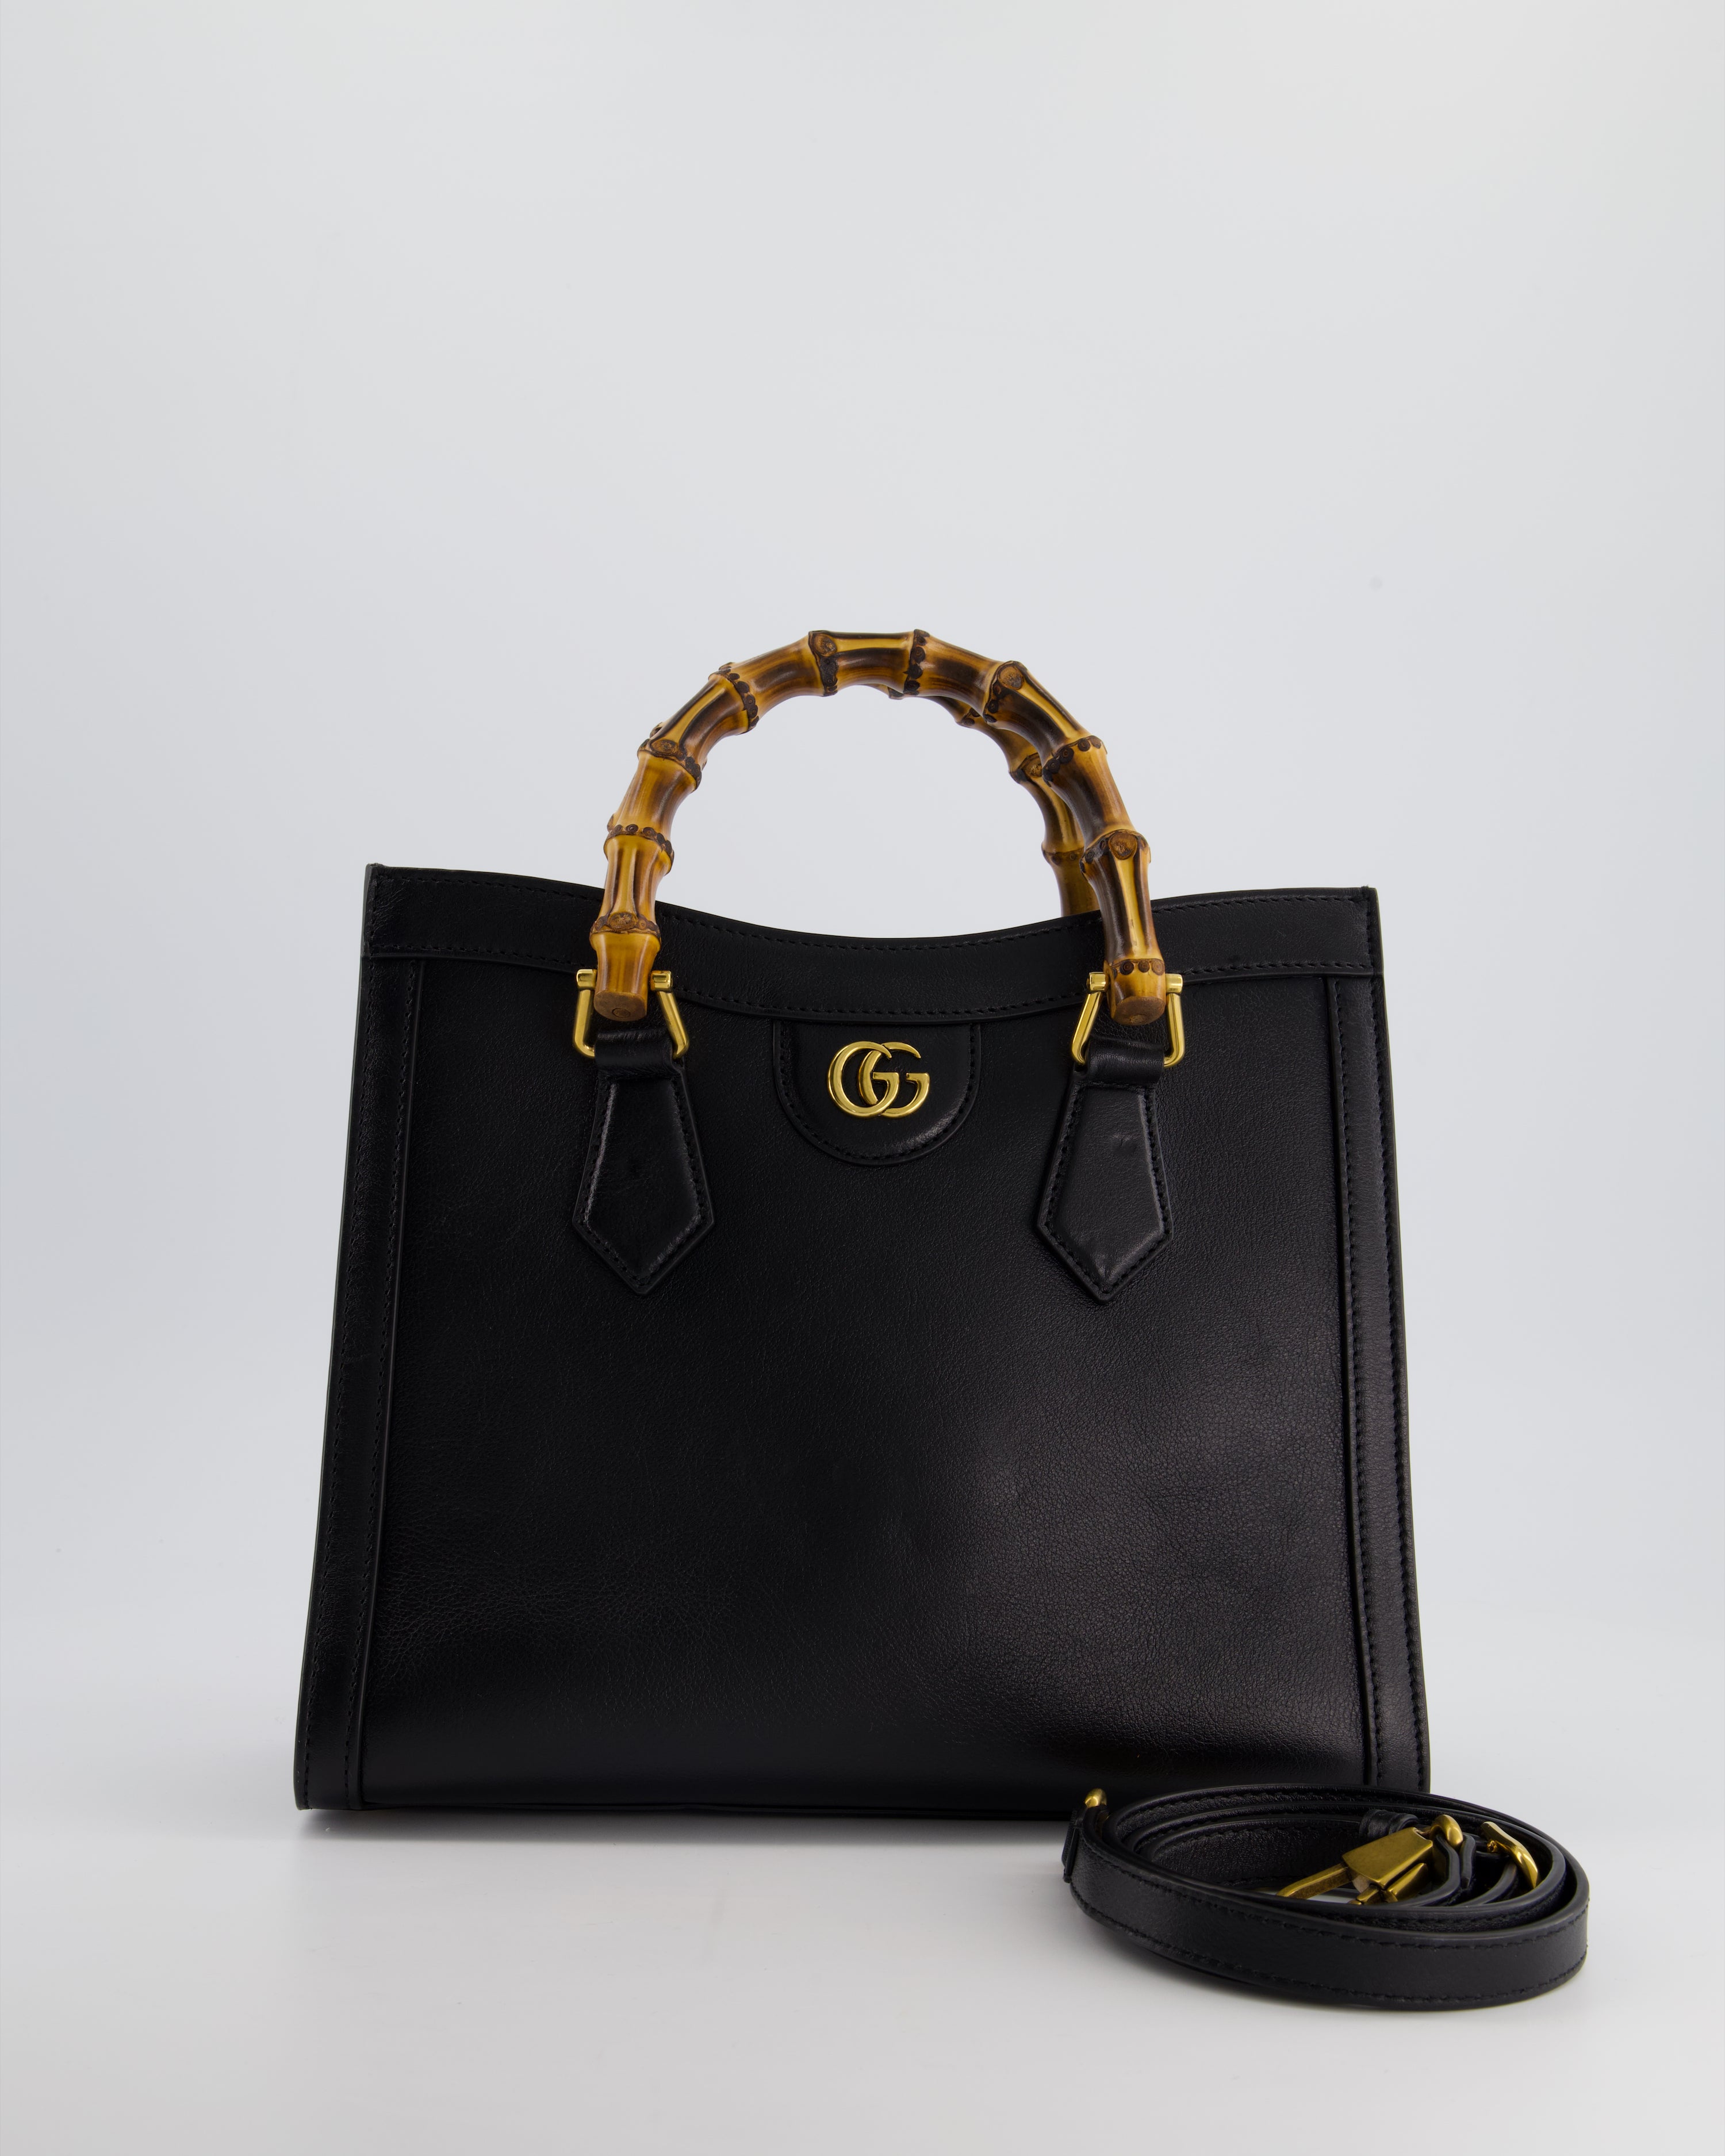 GG Marmont small matelassé | Gucci shoulder bag, Gucci purse, Gucci leather